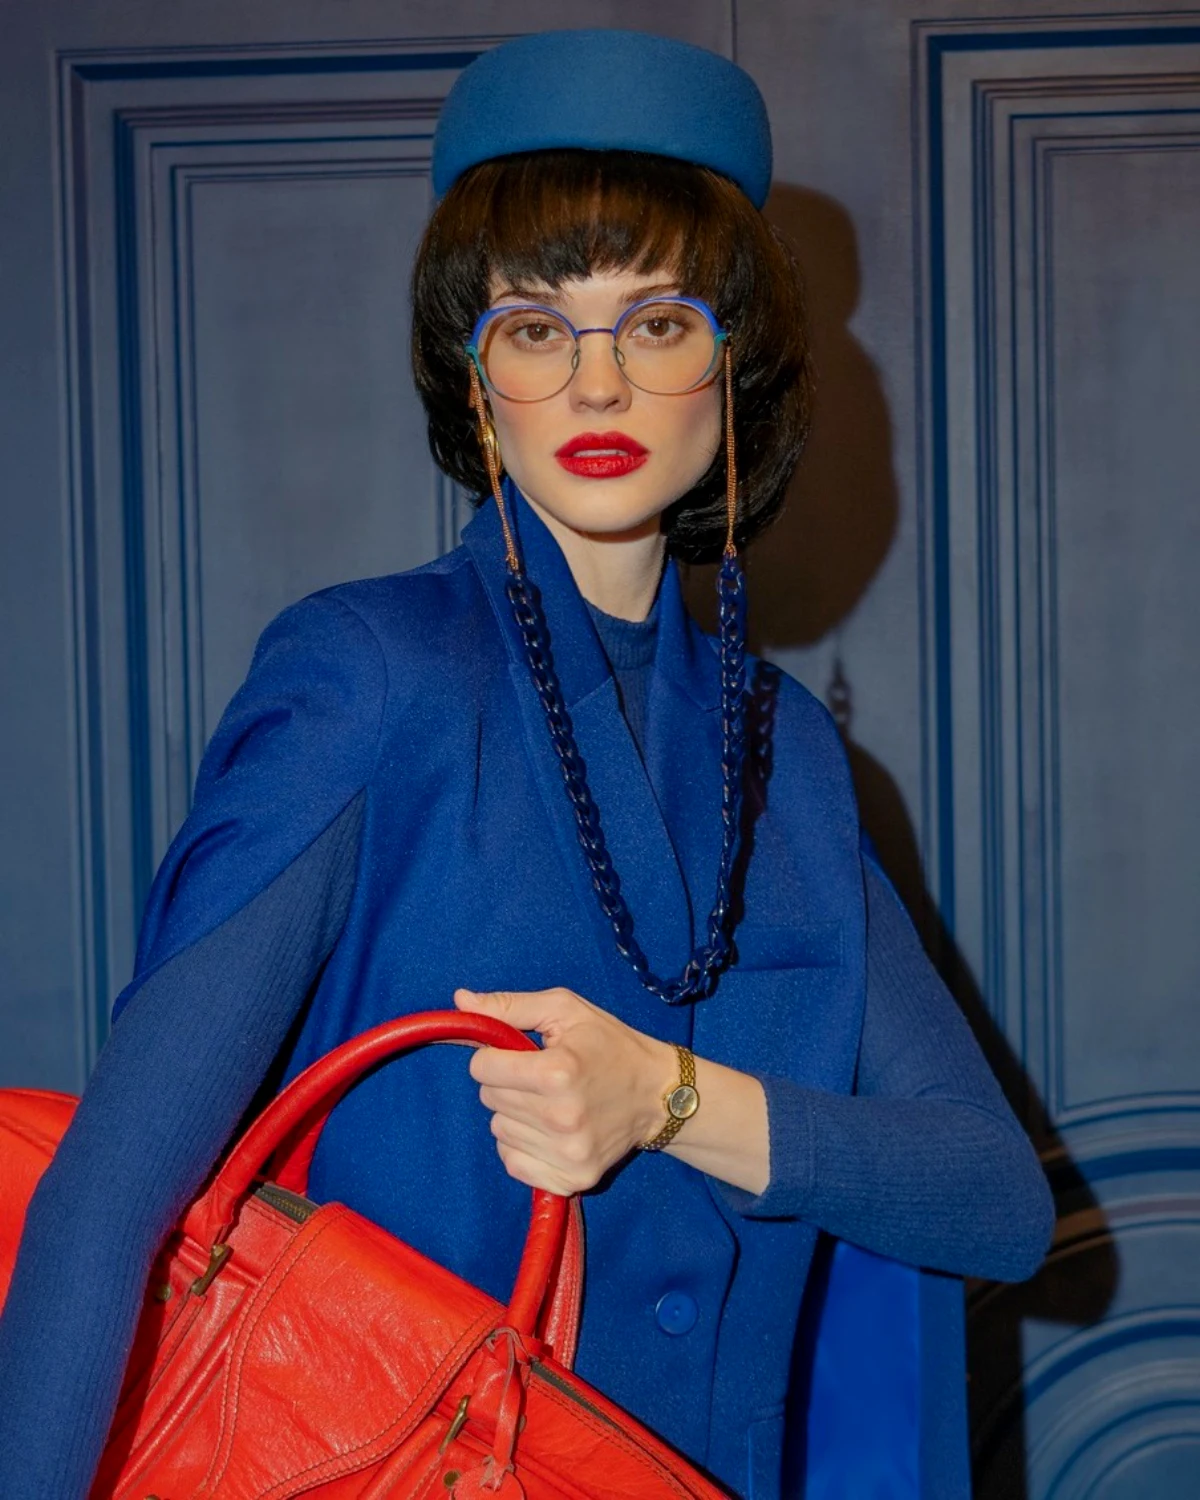 modele femme tenue bleu lunettes bleu sac rouge